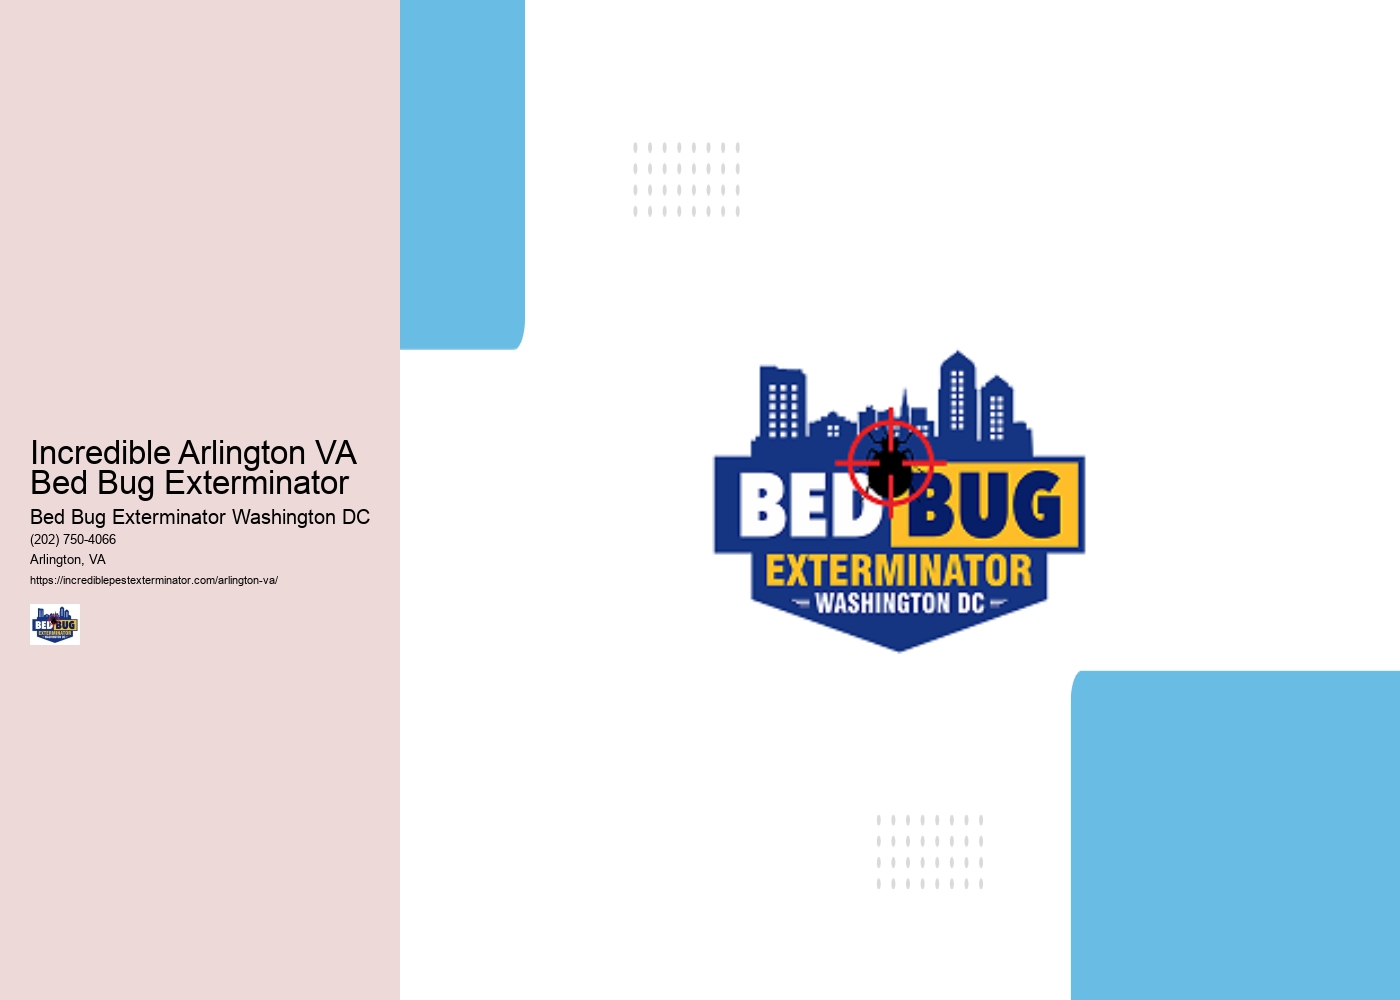 Incredible Arlington VA Bed Bug Exterminator